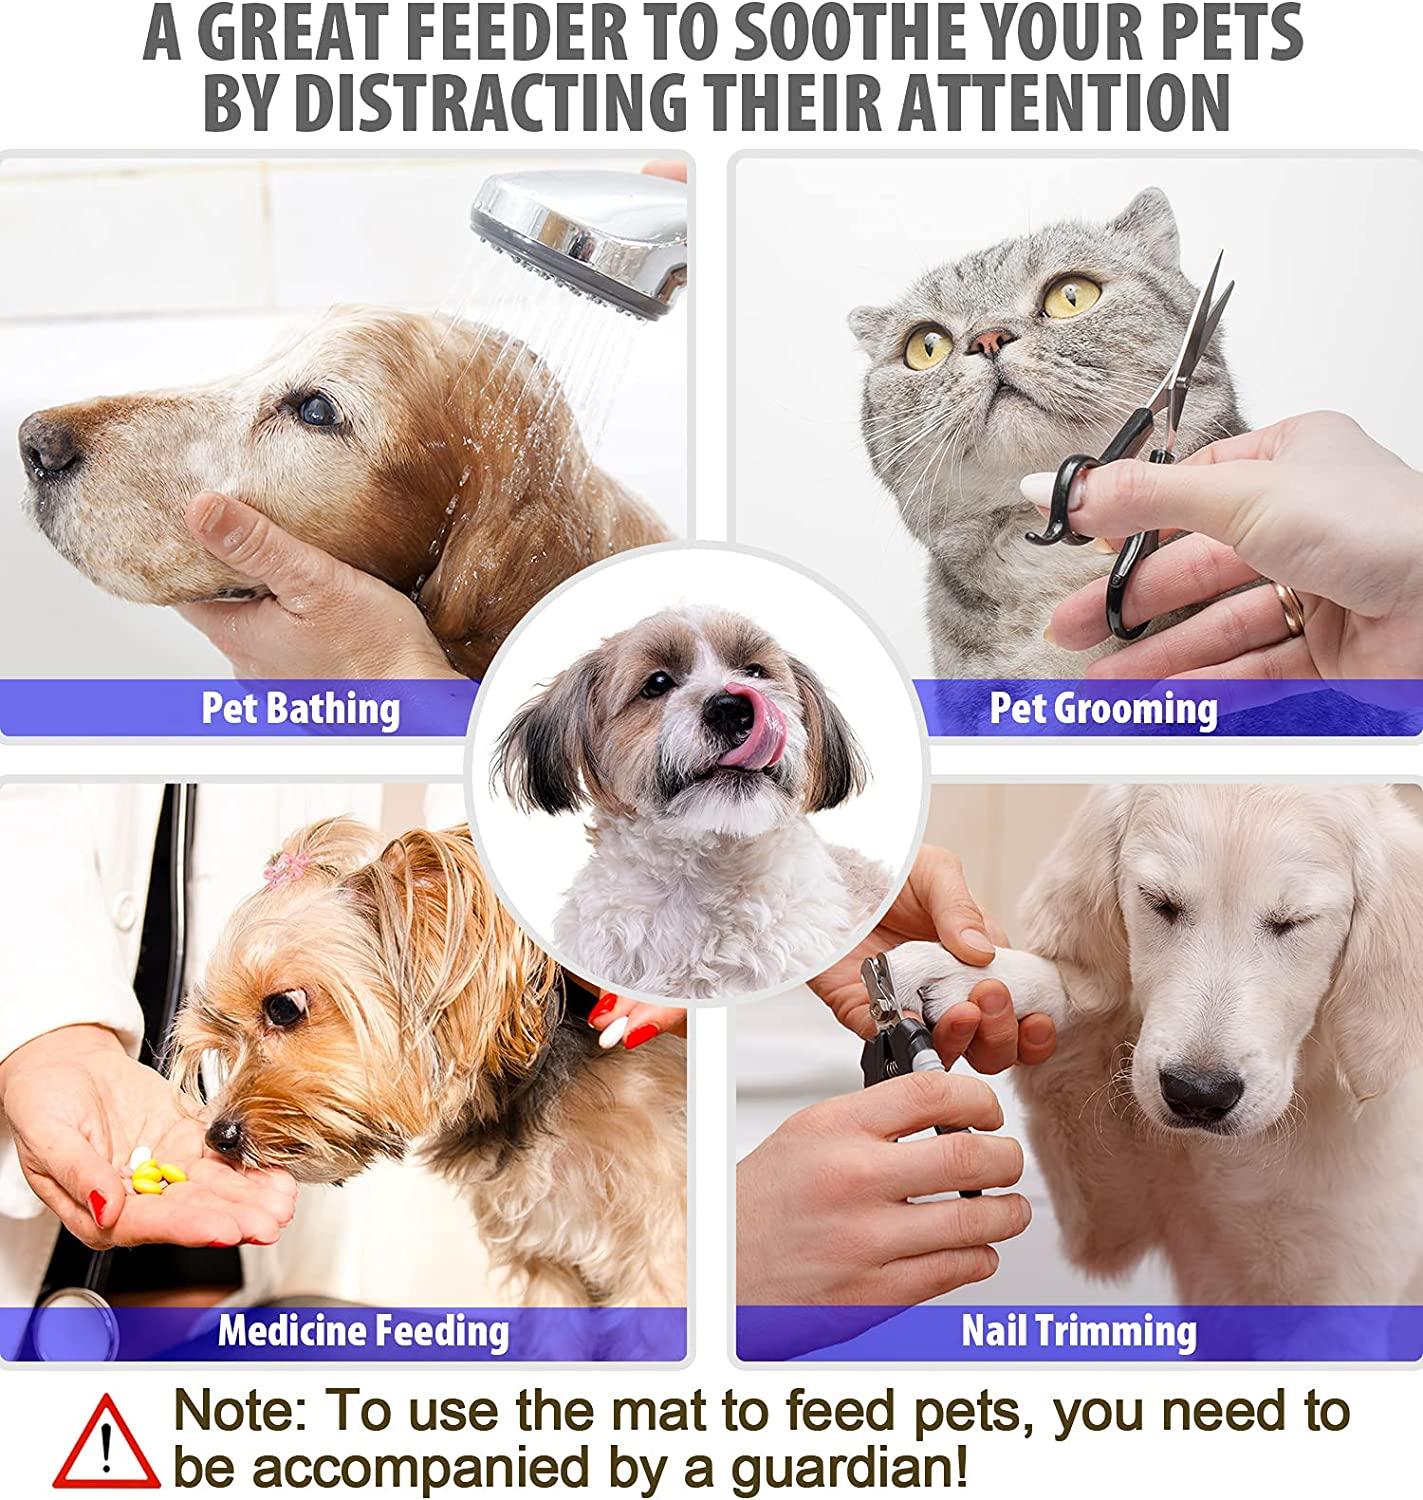 Pet Snuffle Mat Interactive Dog Slow Feeding Mat Dog Puzzle